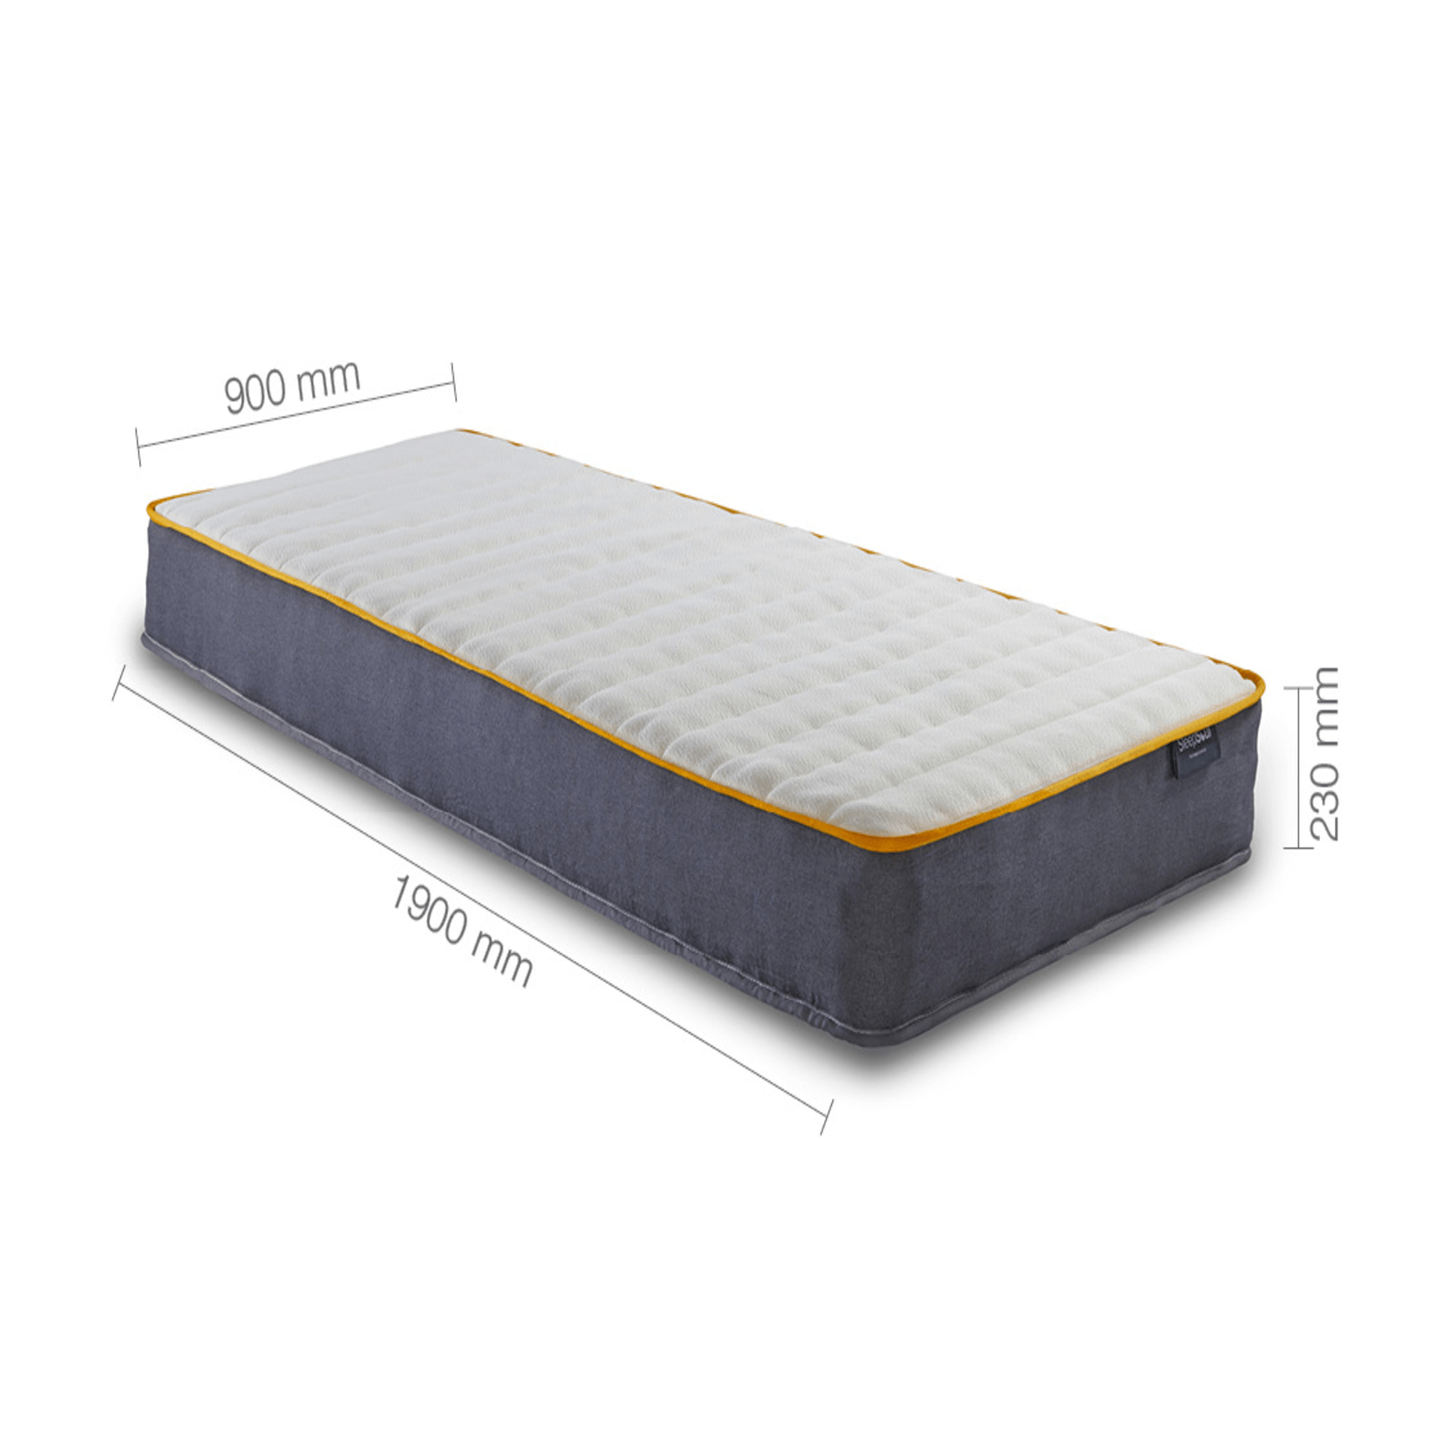 SleepSoul balance 800 pocket spring and memory foam standard single mattress dimensions